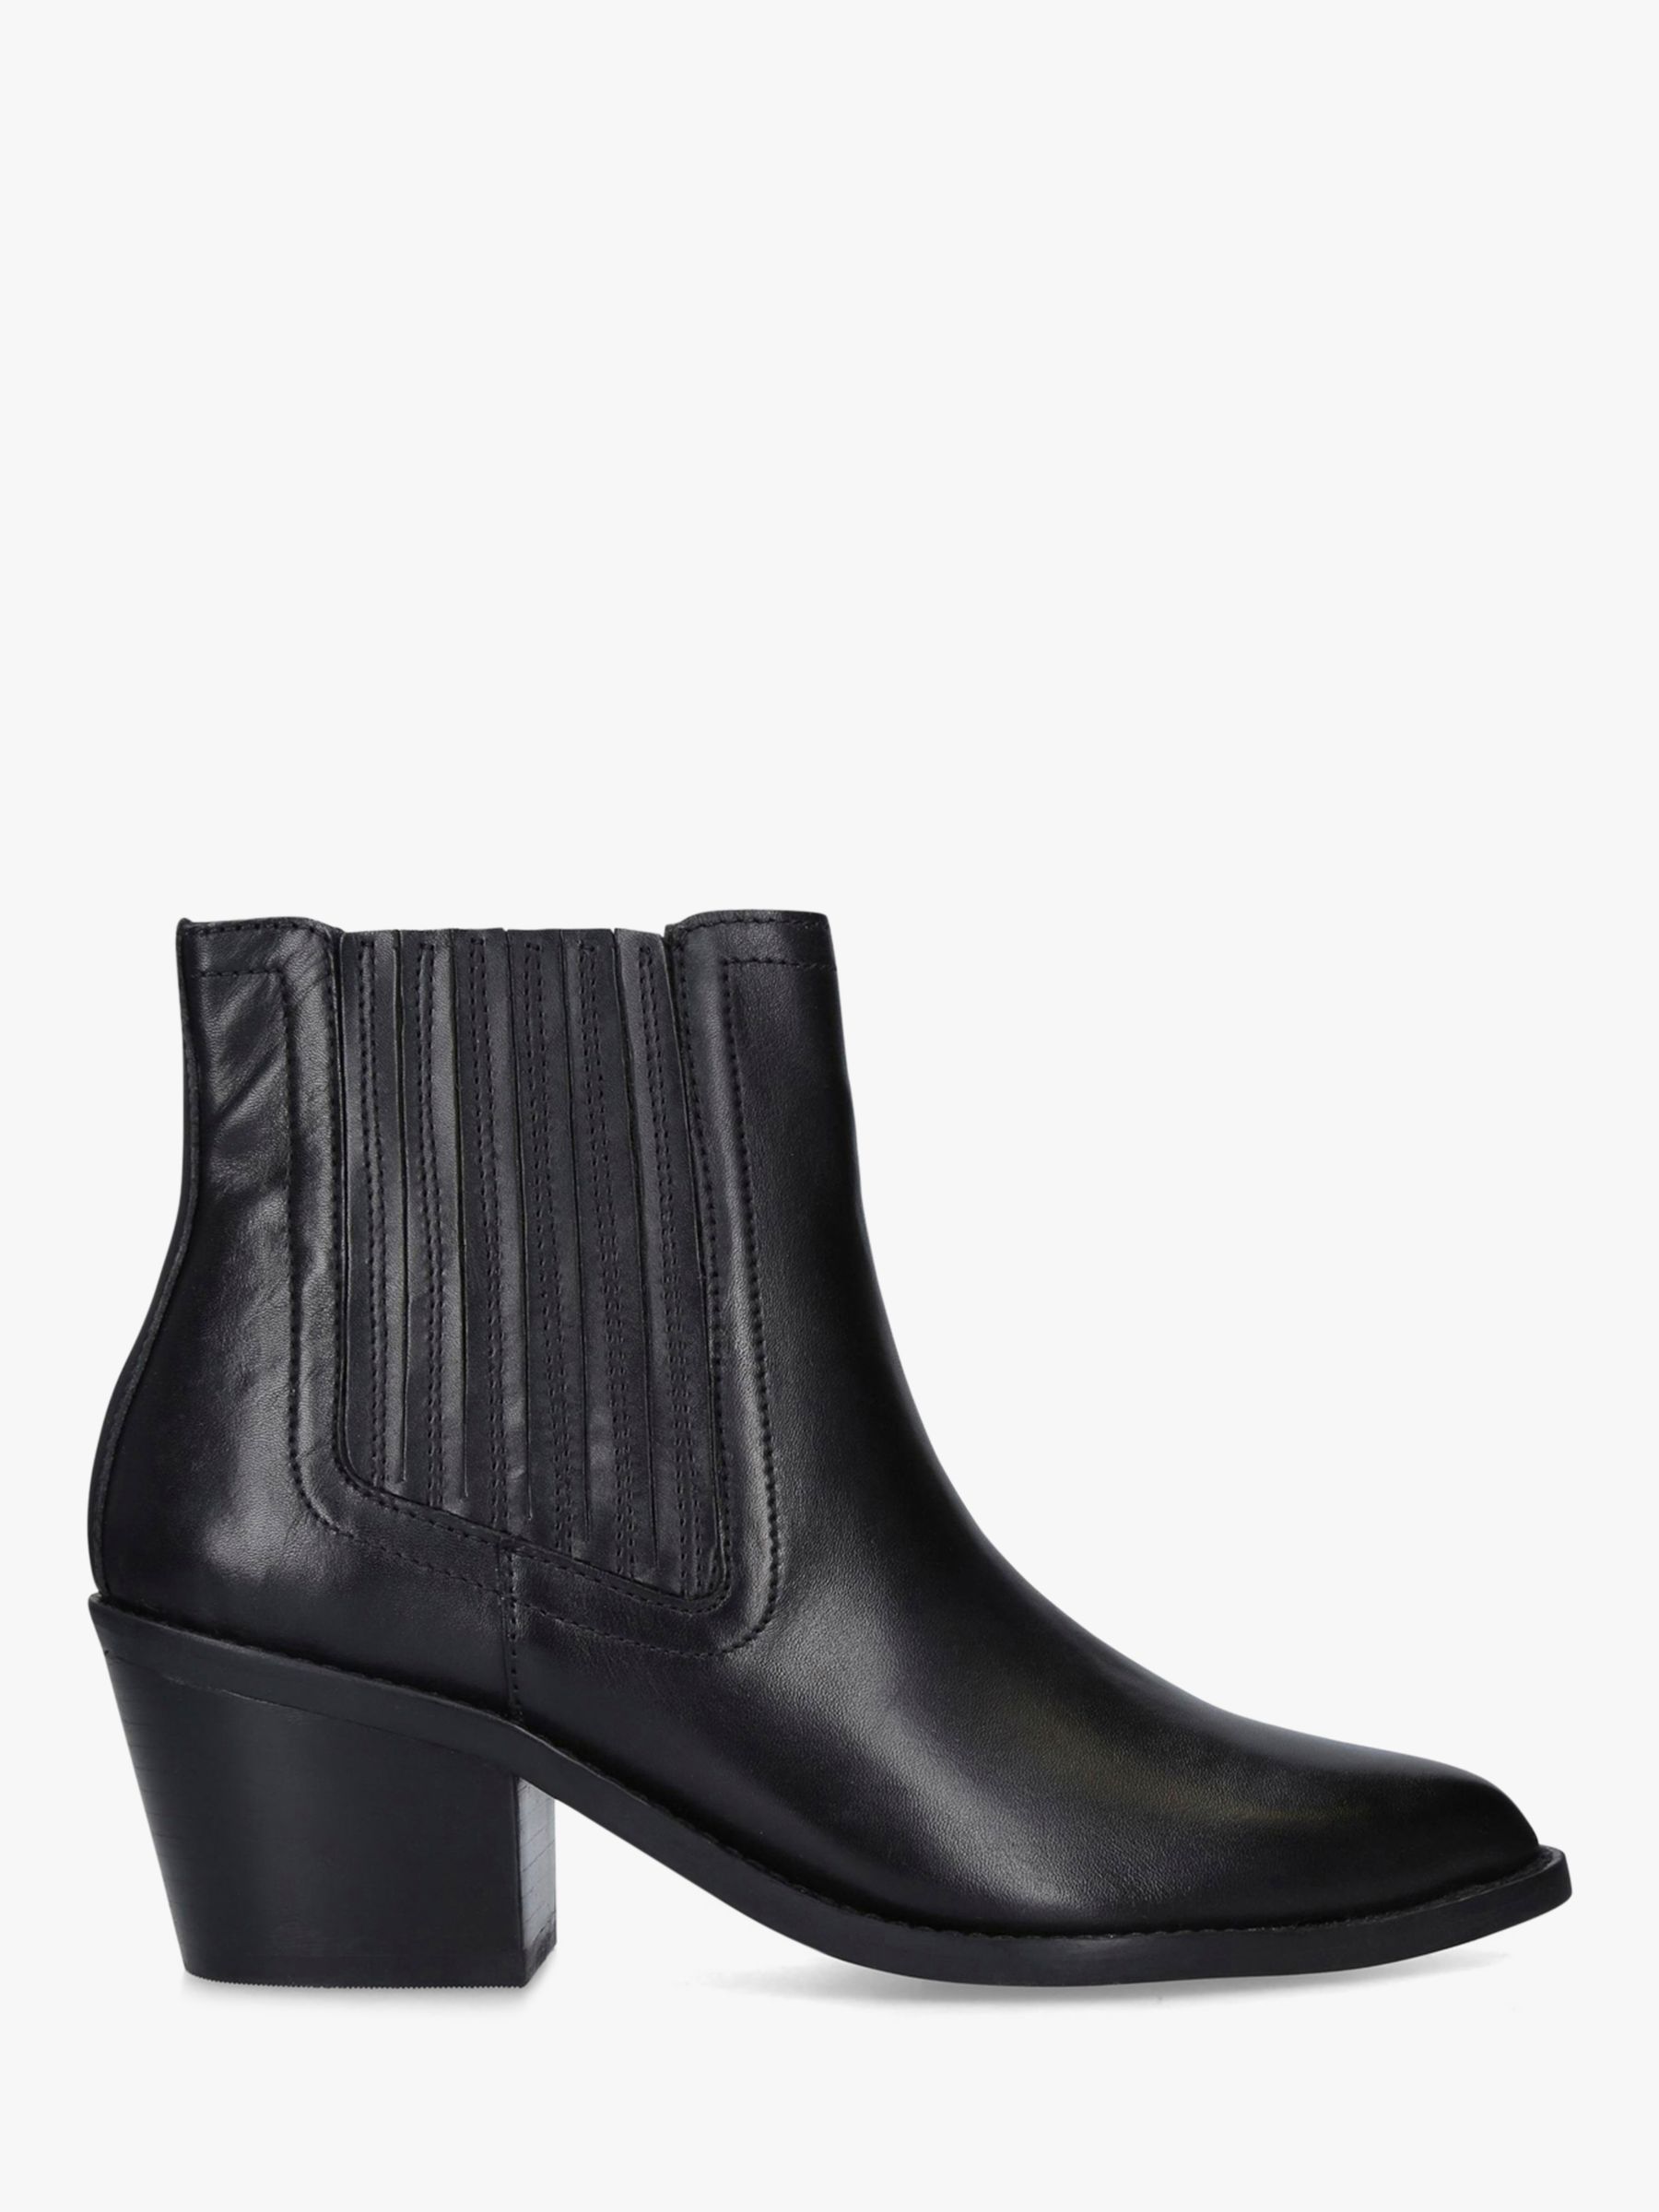 Kurt Geiger London Sylvie Leather Block Heel Ankle Boots, Black